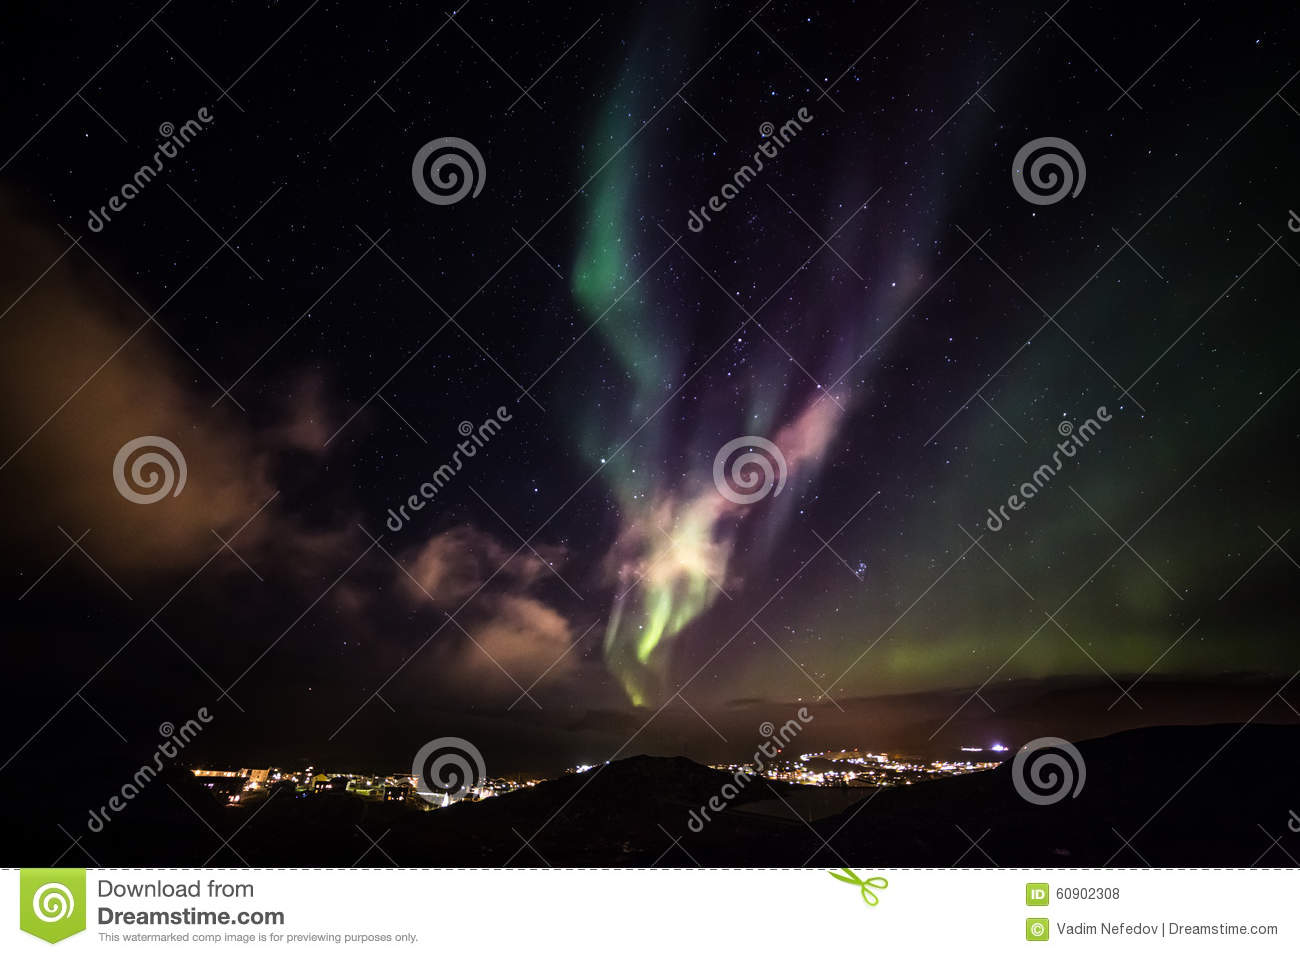 Greenlandic Northern Lights